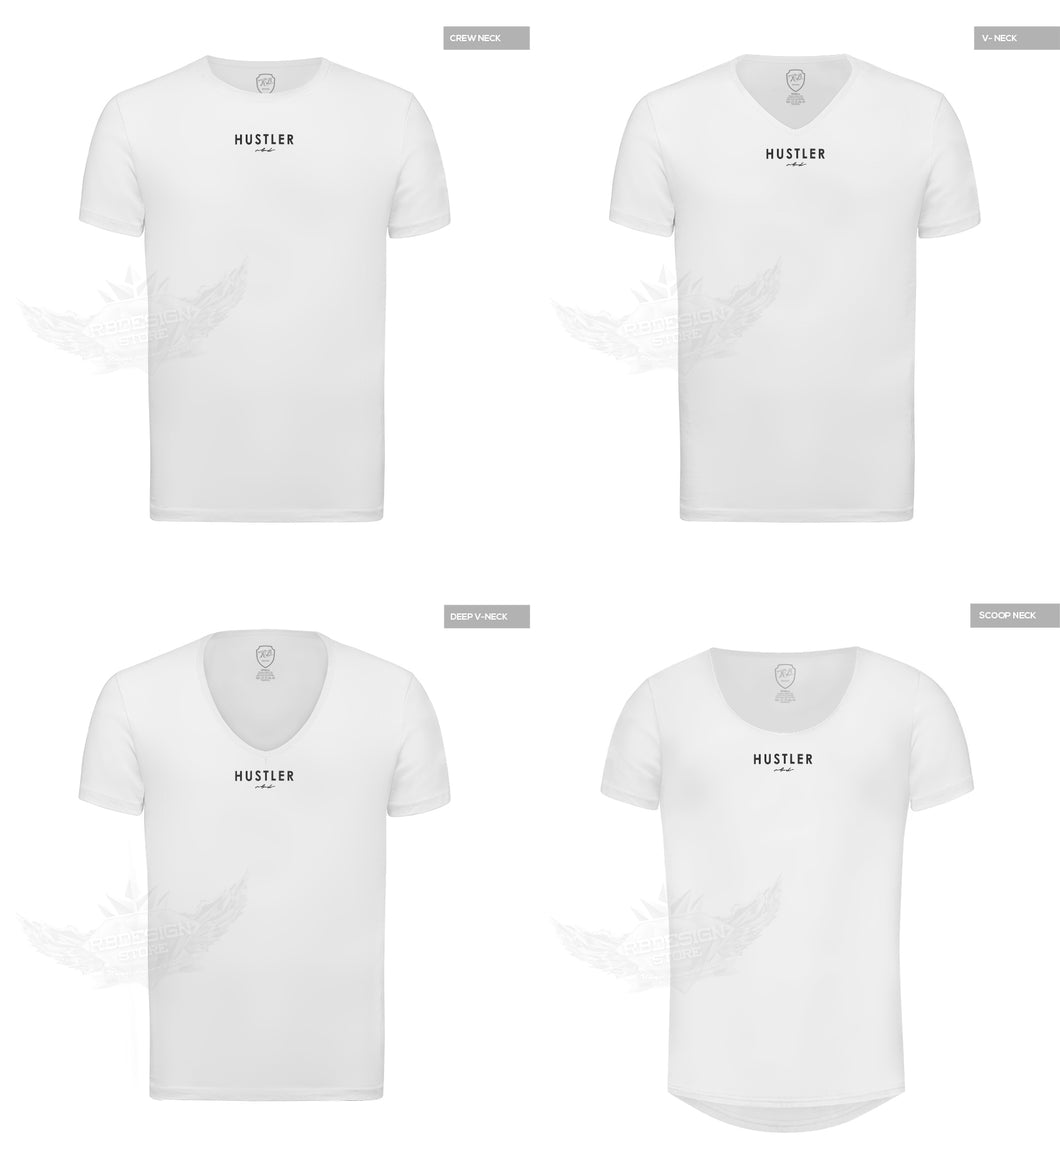 HUSTLER The Best Entrepreneur Mens T-shirts Online - Motivation Tees ...